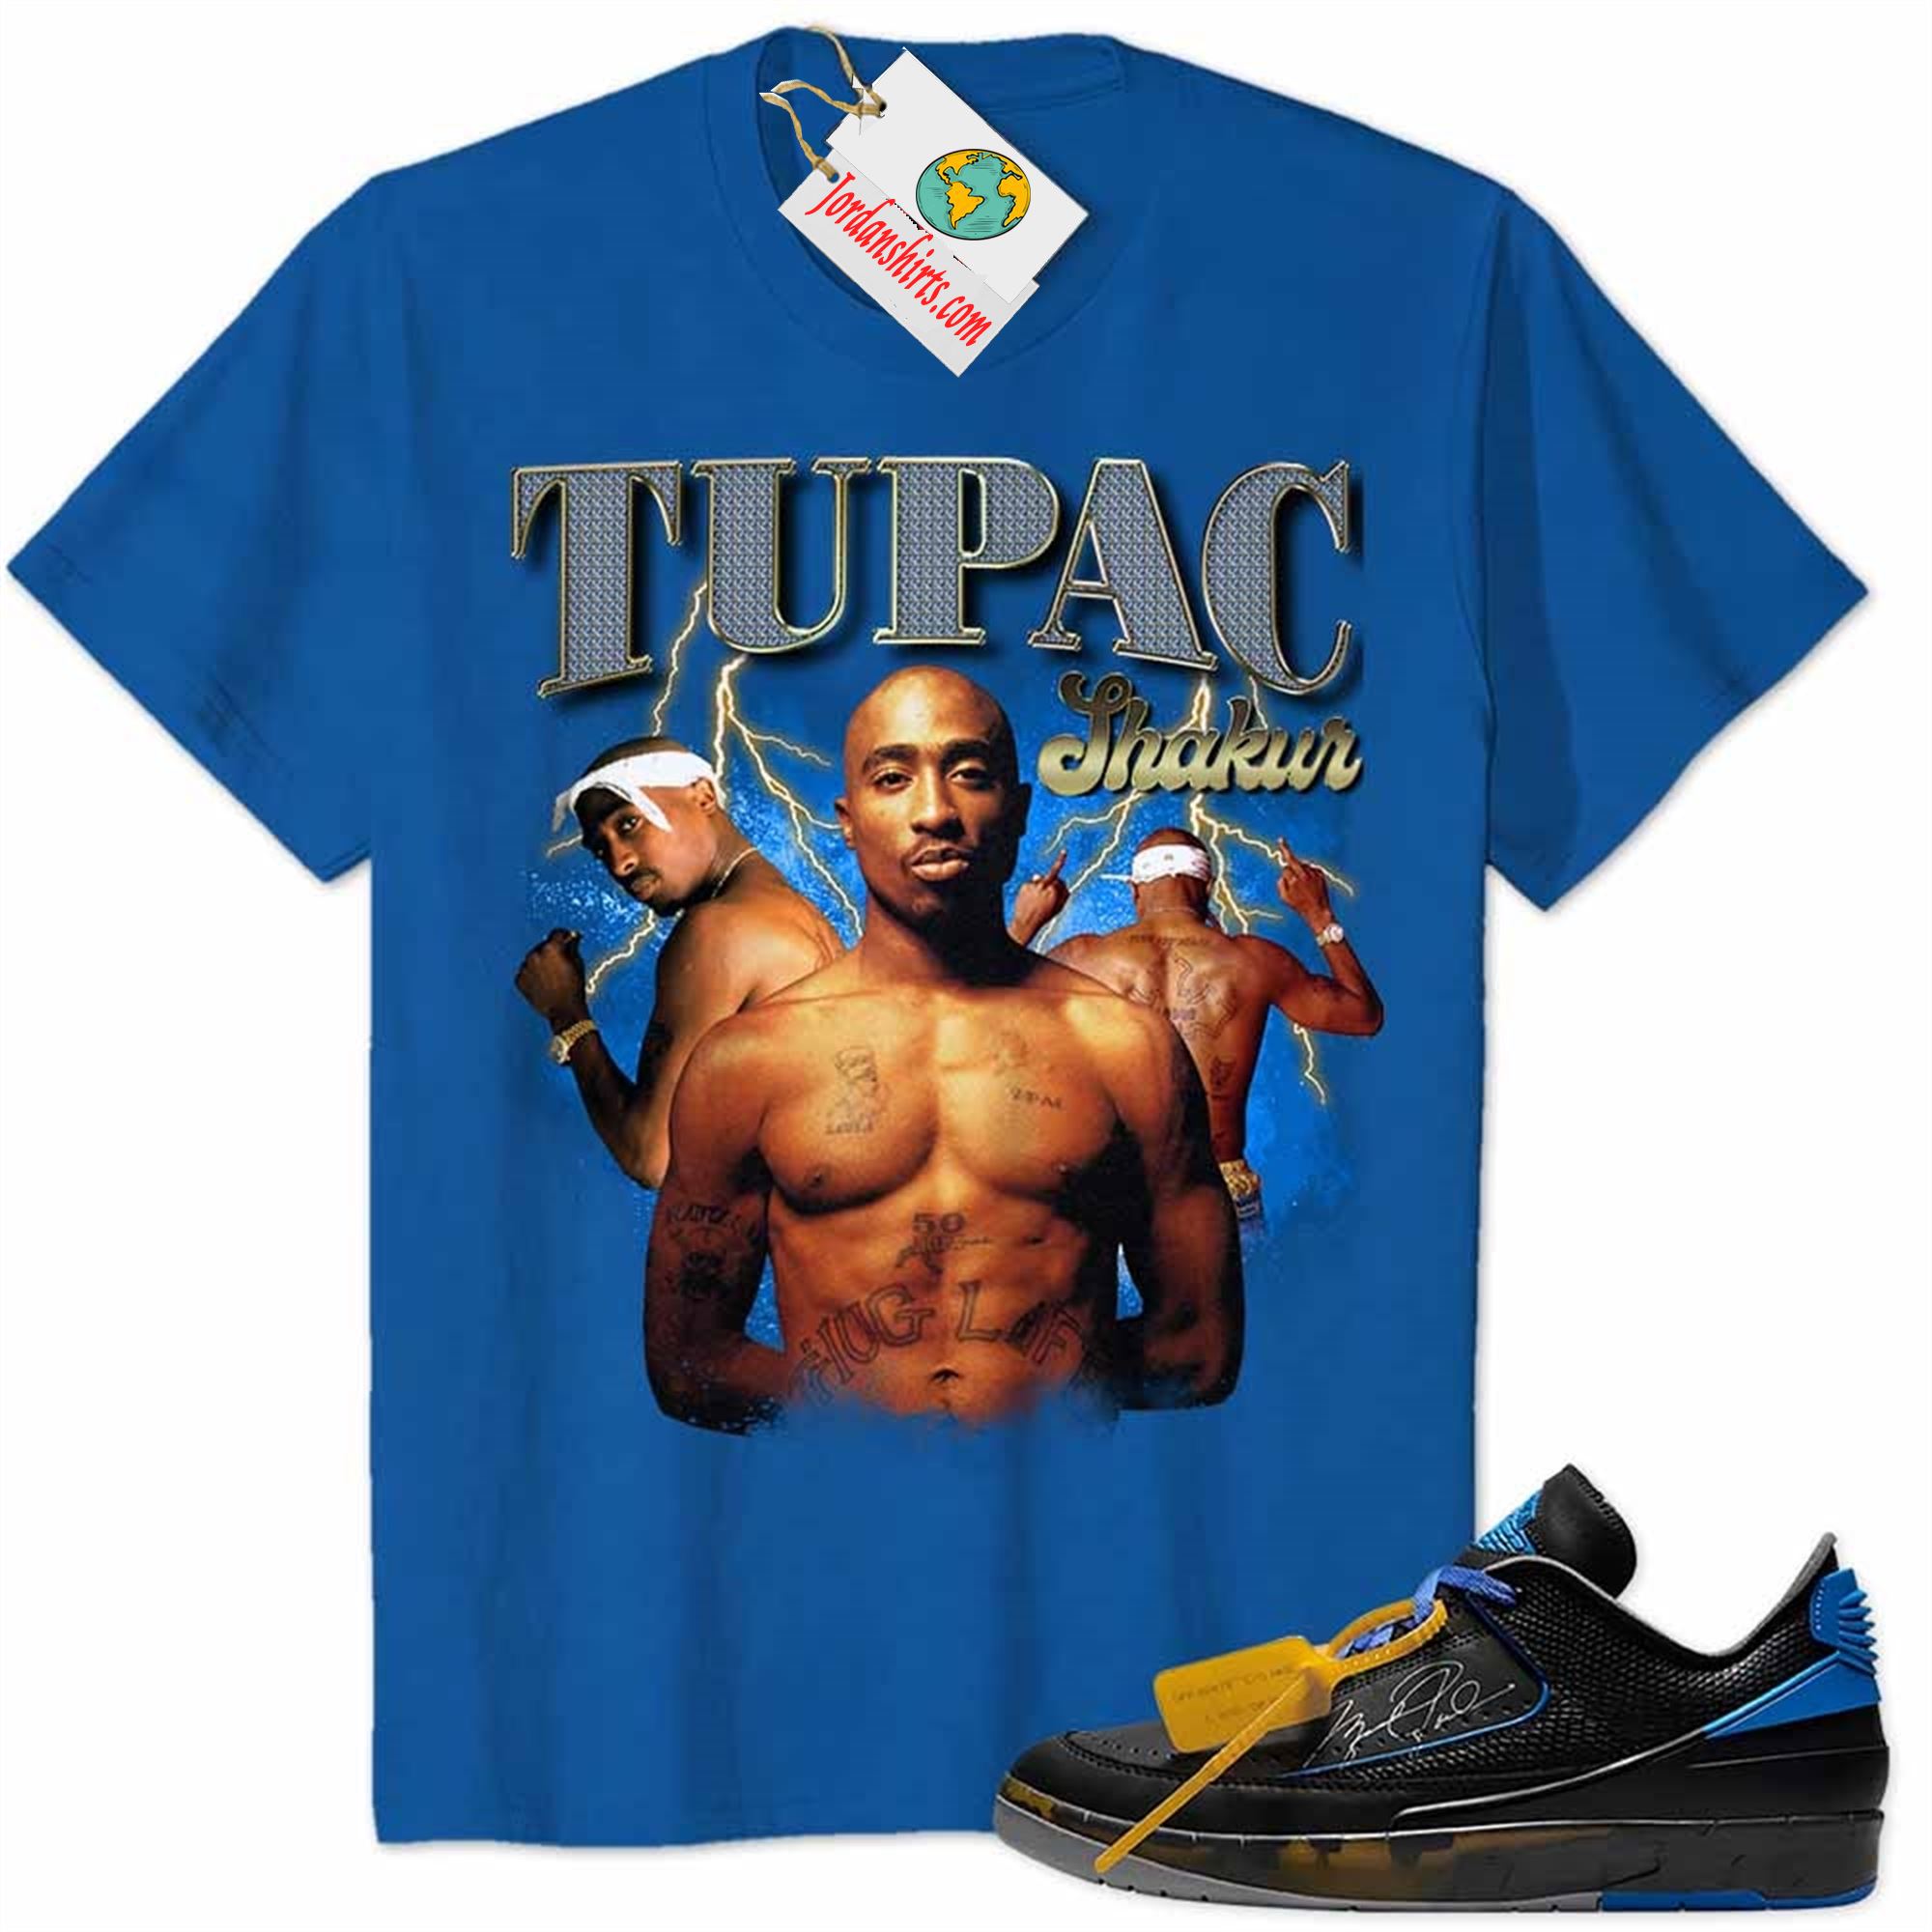 Jordan 2 Shirt, Tupac 2pac Shakur Graphic Blue Air Jordan 2 Low X Off-white Black And Varsity Royal 2s Size Up To 5xl